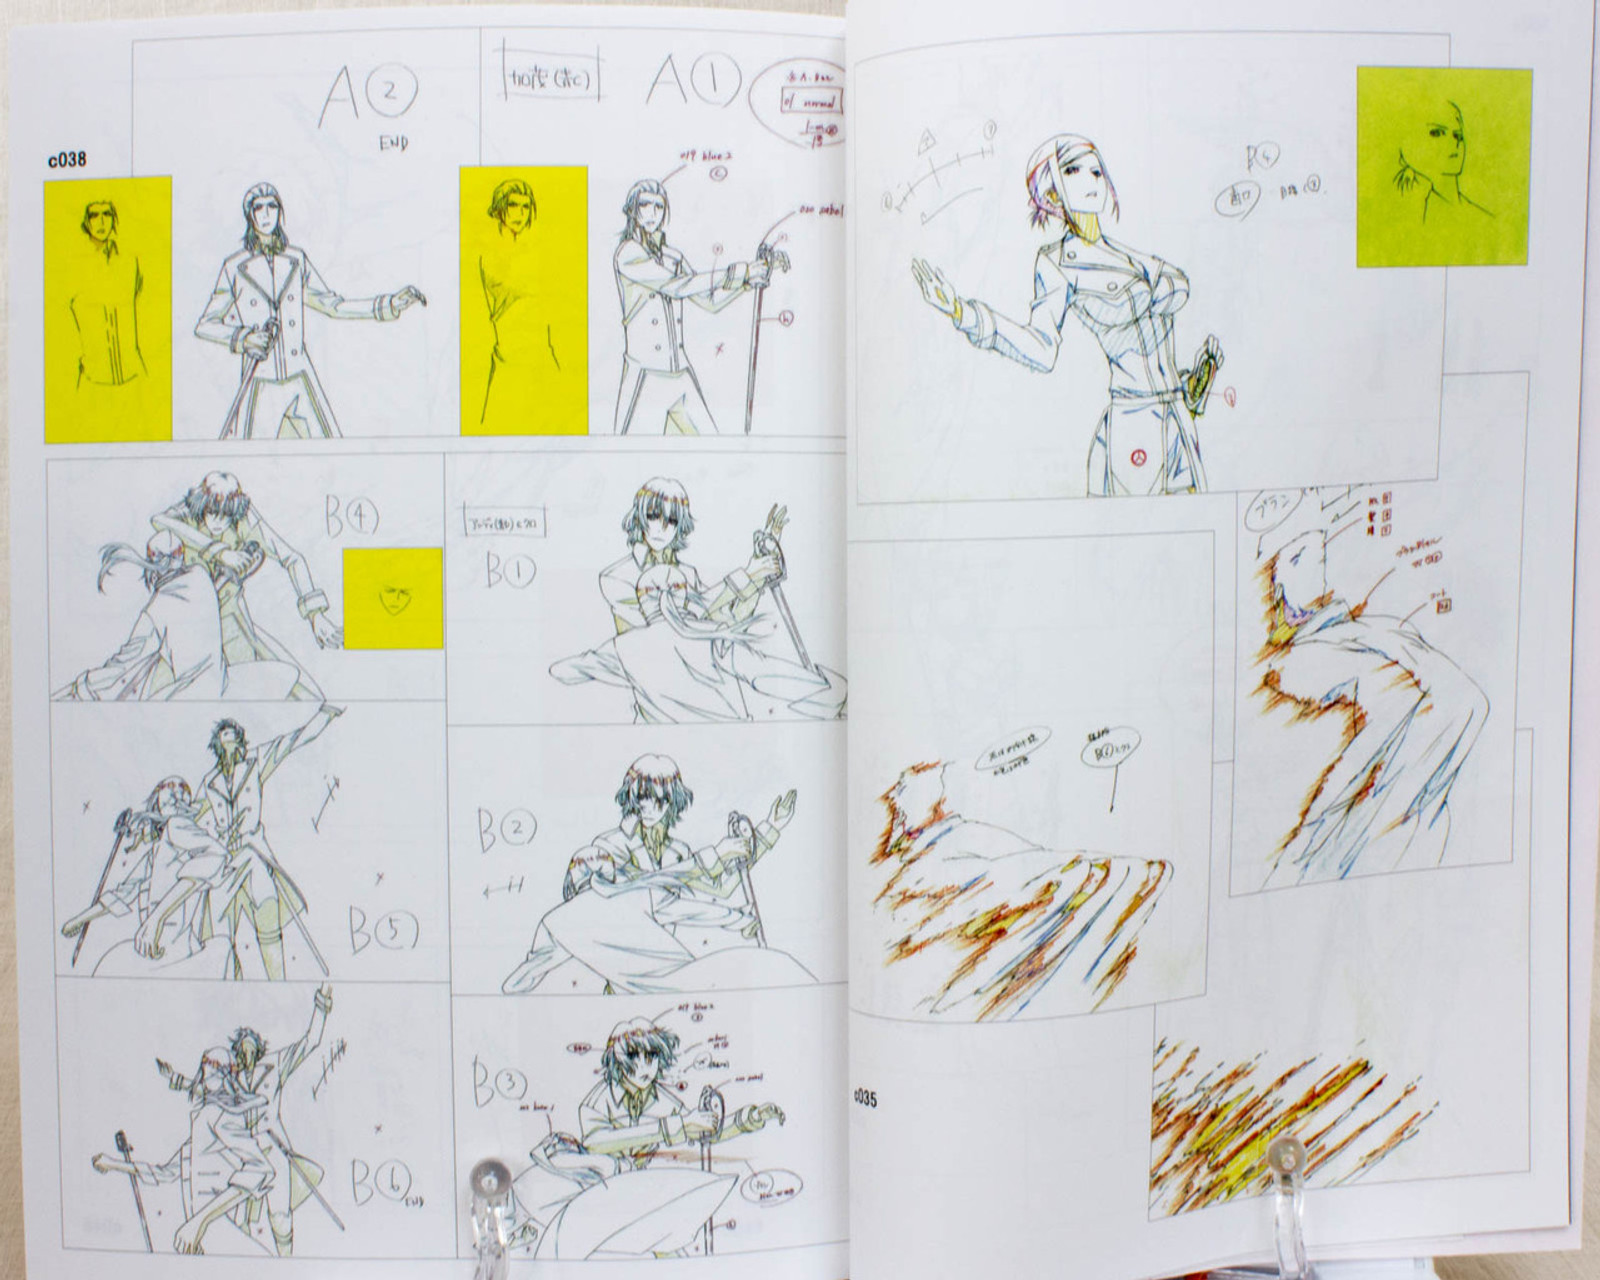 GoHands WORKS K Project Original Sketches Art Book #07-13 JAPAN ANIME MANGA